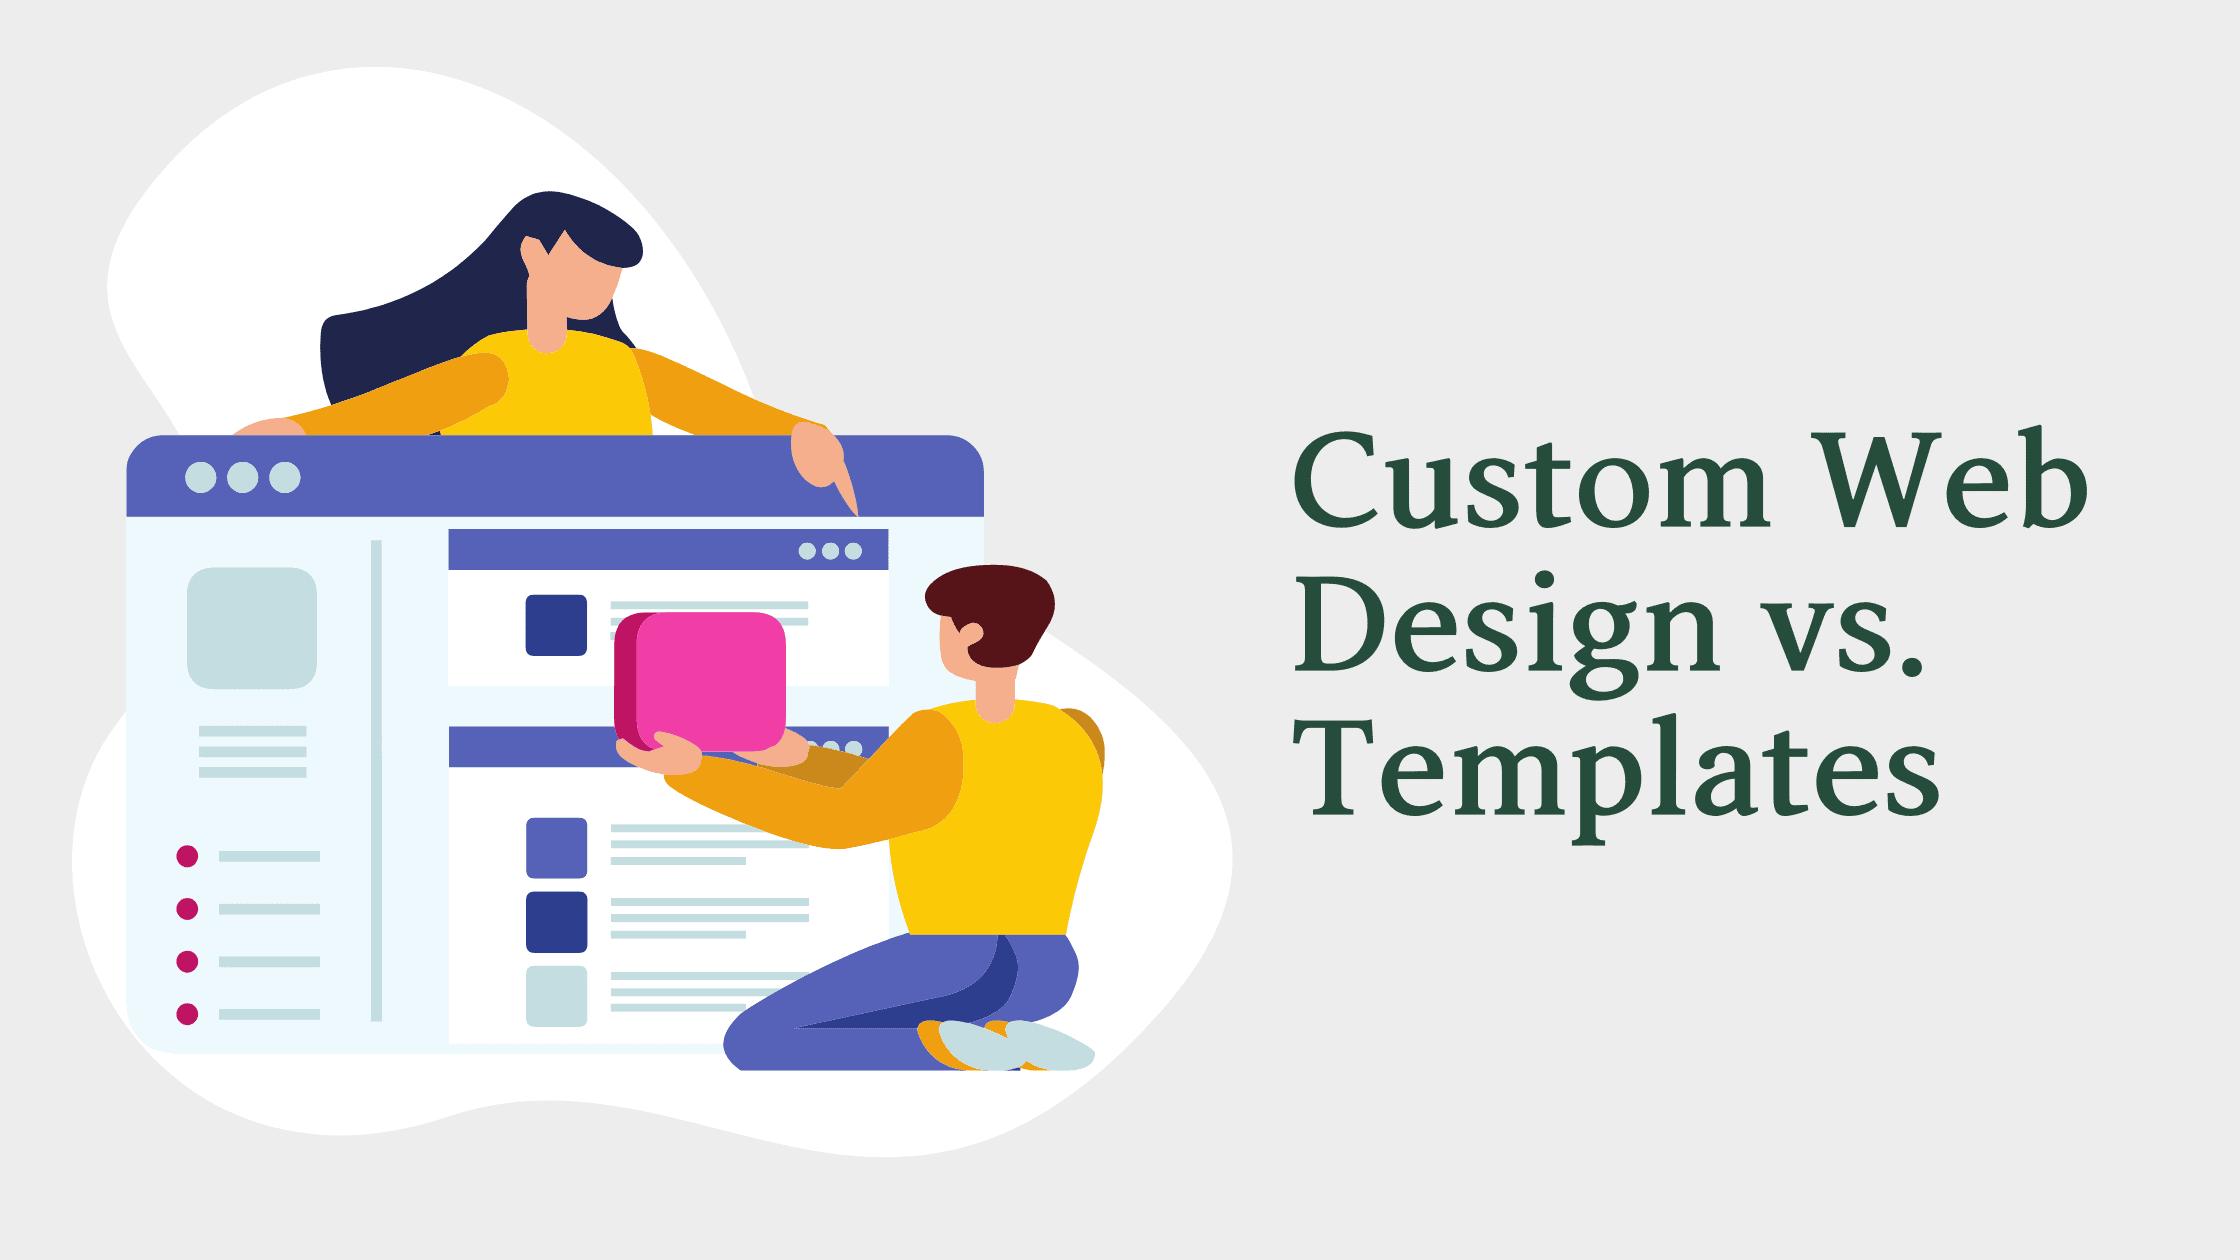 Custom Web Design vs. Templates